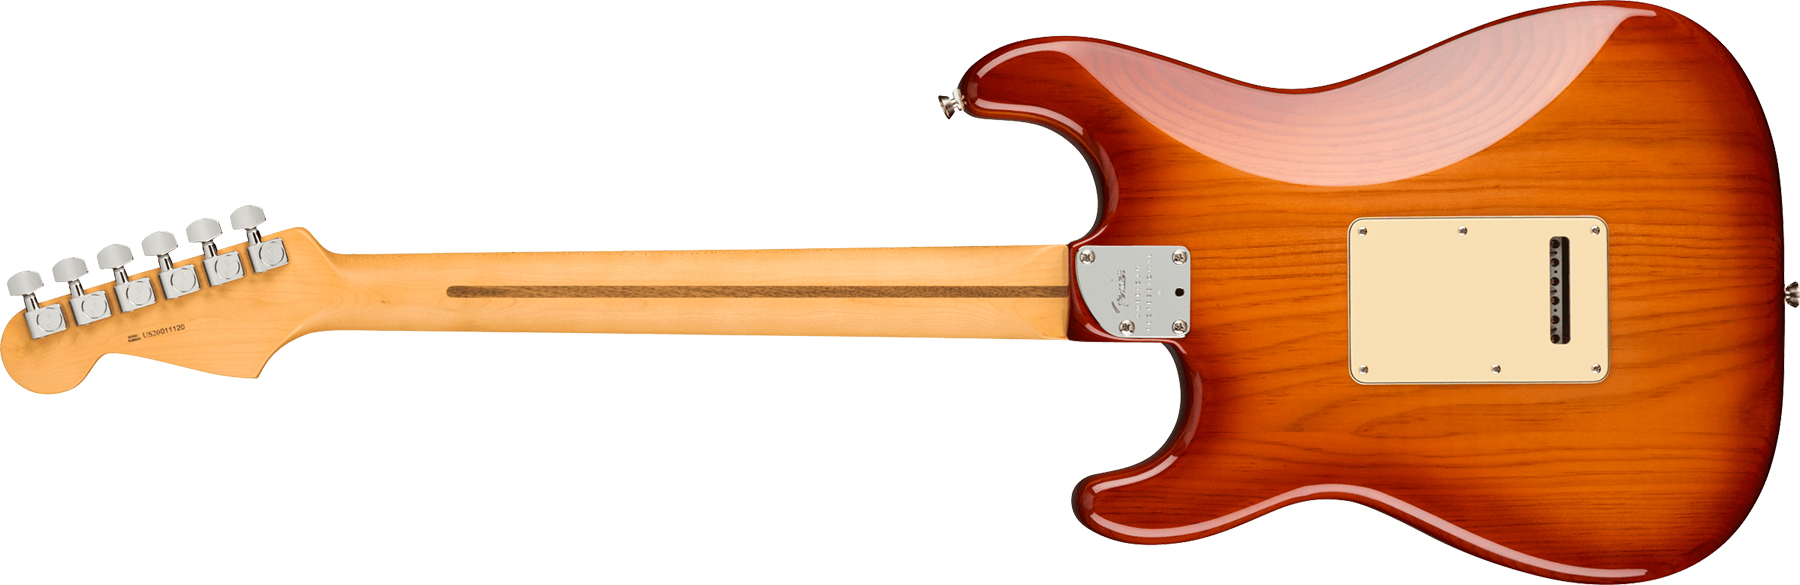 Fender Strat American Professional Ii Hss Usa Mn - Sienna Sunburst - Guitarra eléctrica con forma de str. - Variation 1